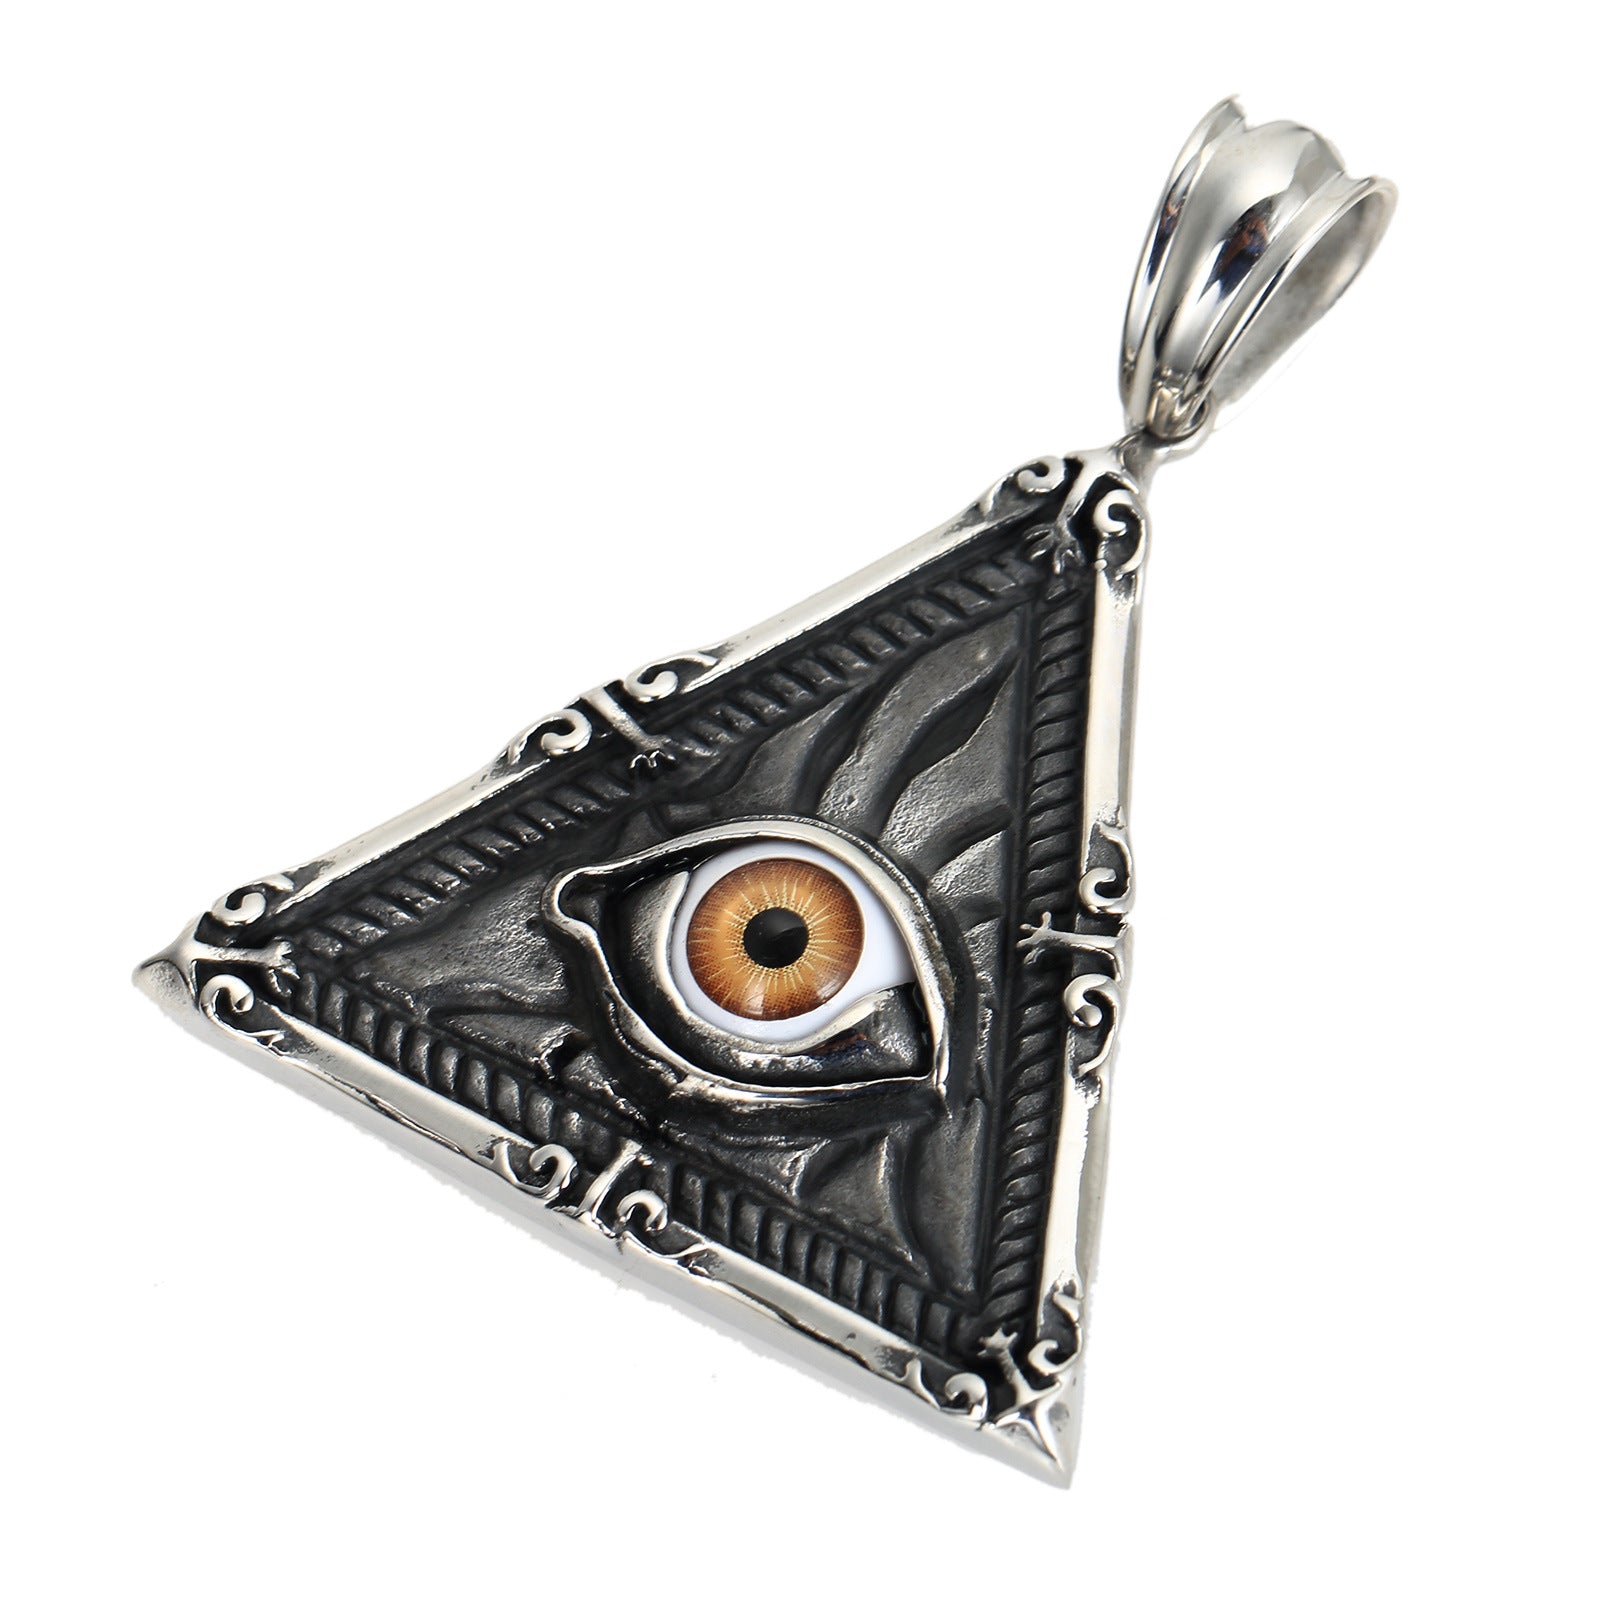 Eye Of Providence Necklace - All Seeing Eye Stainless Steel Pendant - Bricks Masons